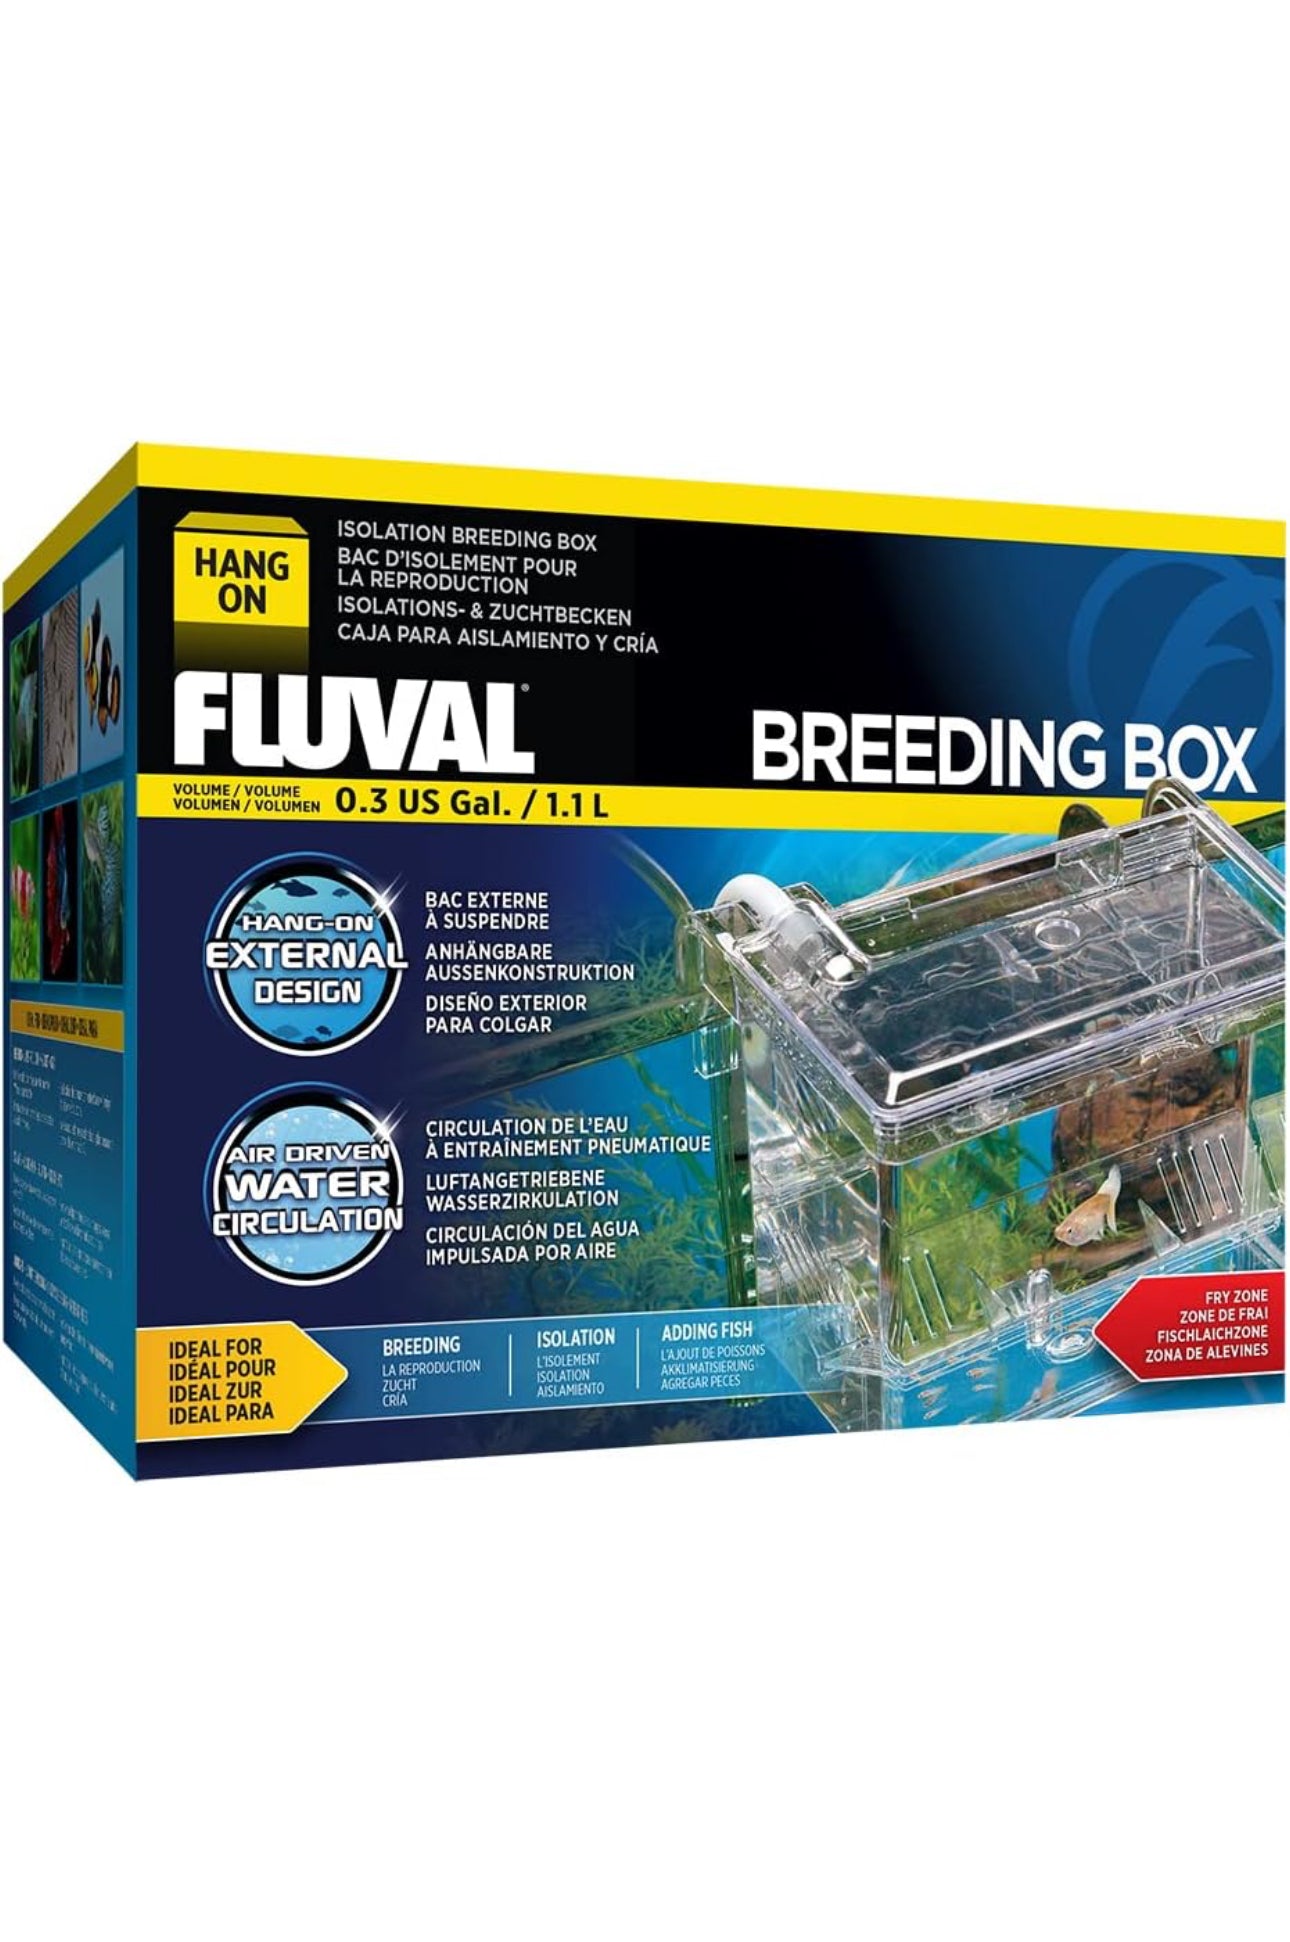 Fluval Holding/Breeding Box